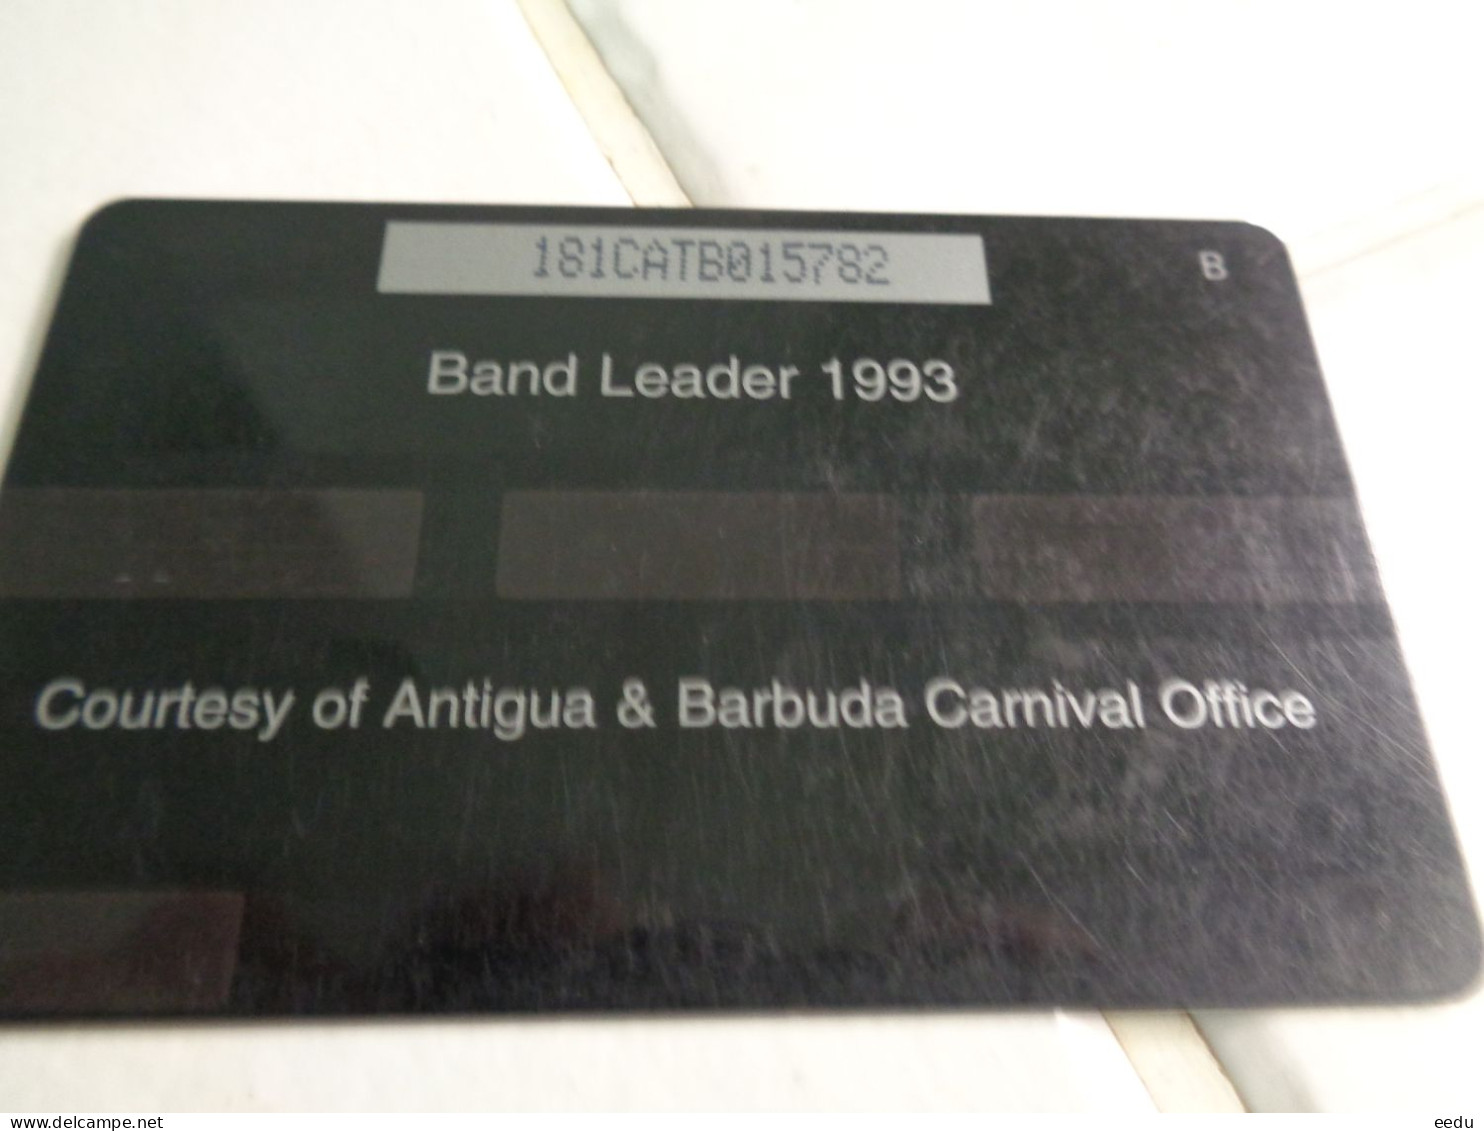 Antigua & Barbuda Phonecard - Antigua And Barbuda